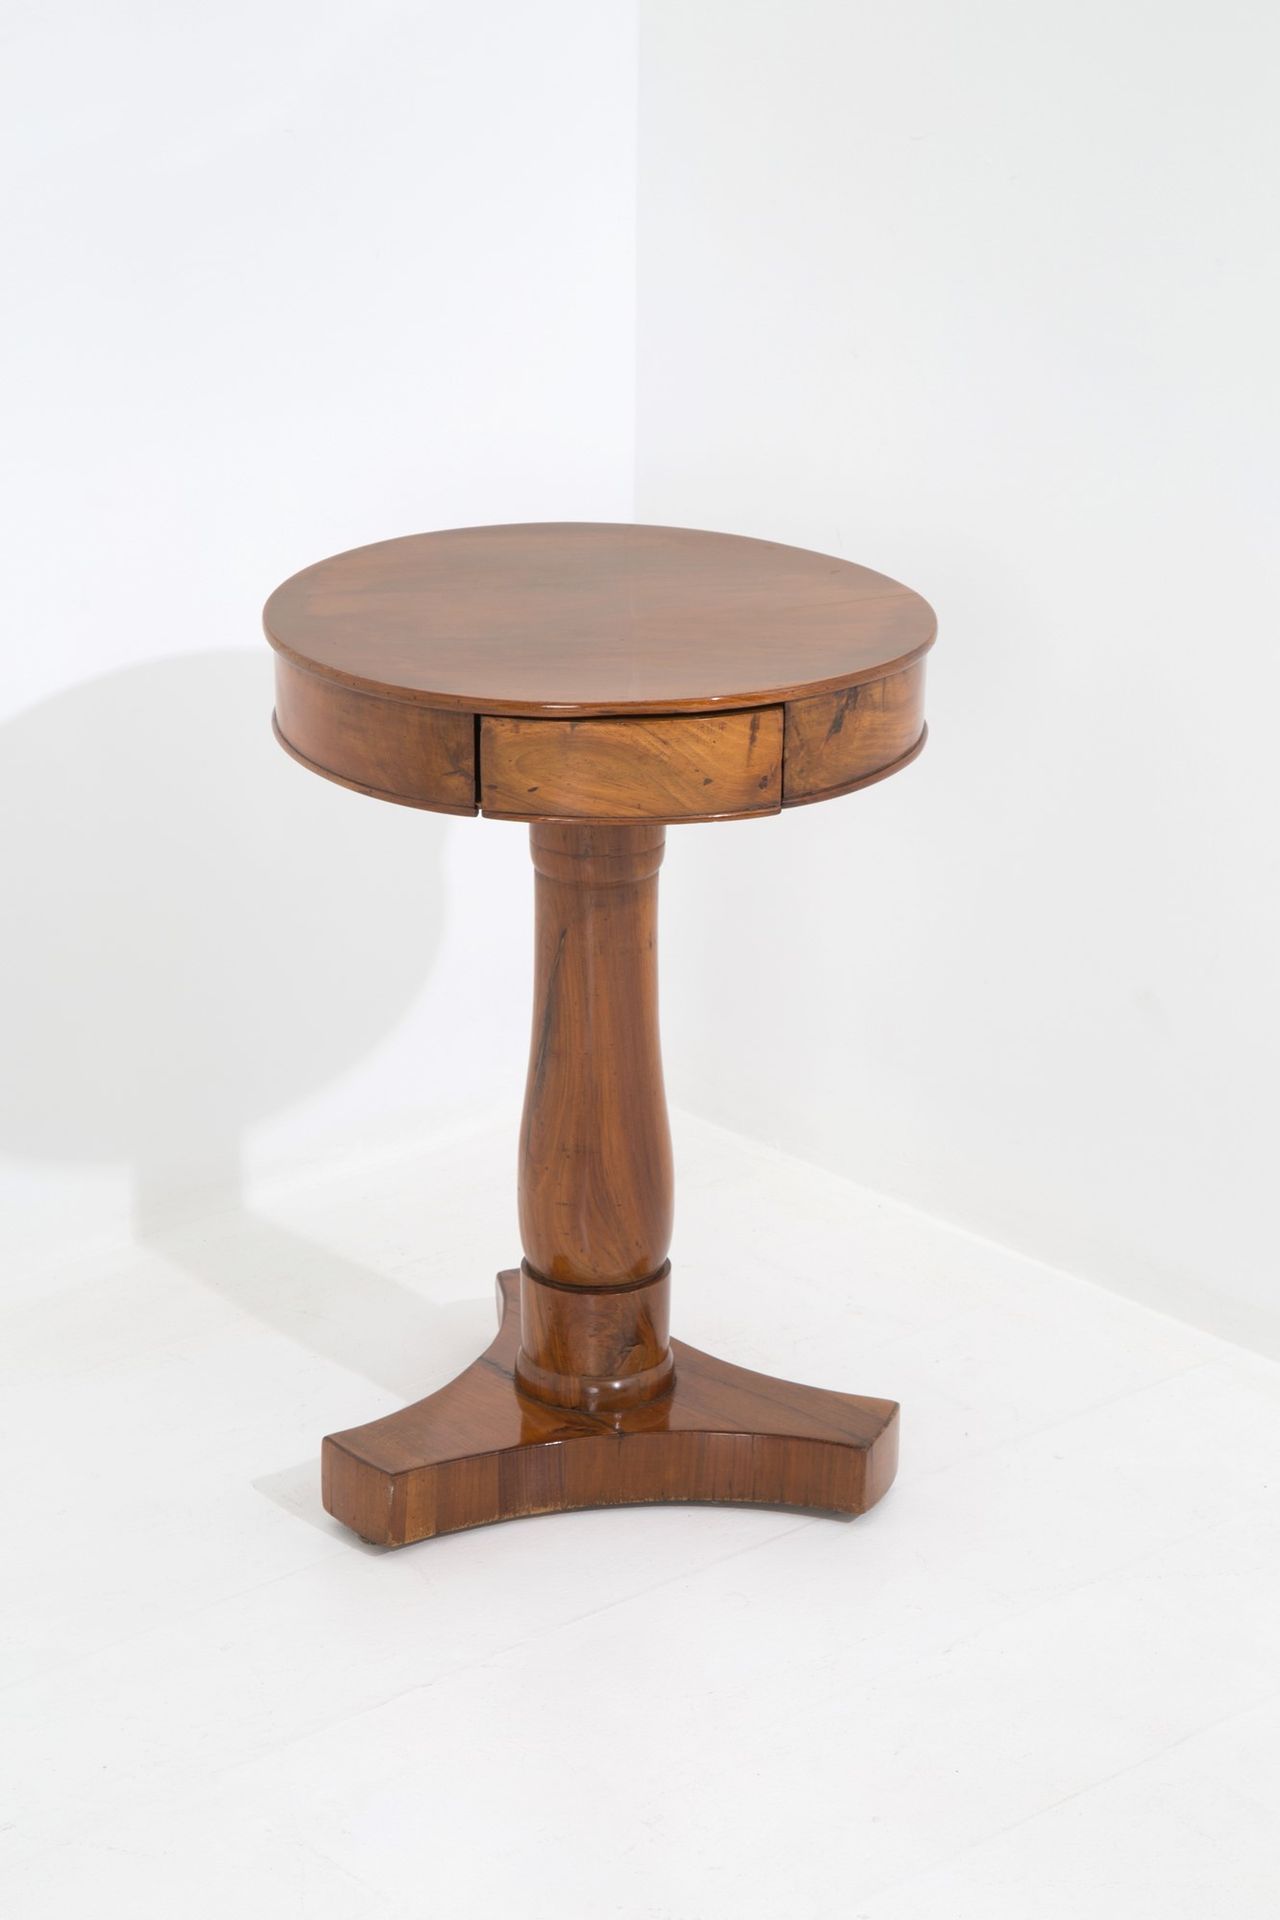 Round coffee table 胡桃木圆形咖啡桌，有三个聚脂脚和两个抽屉。19世纪。约70x50厘米。